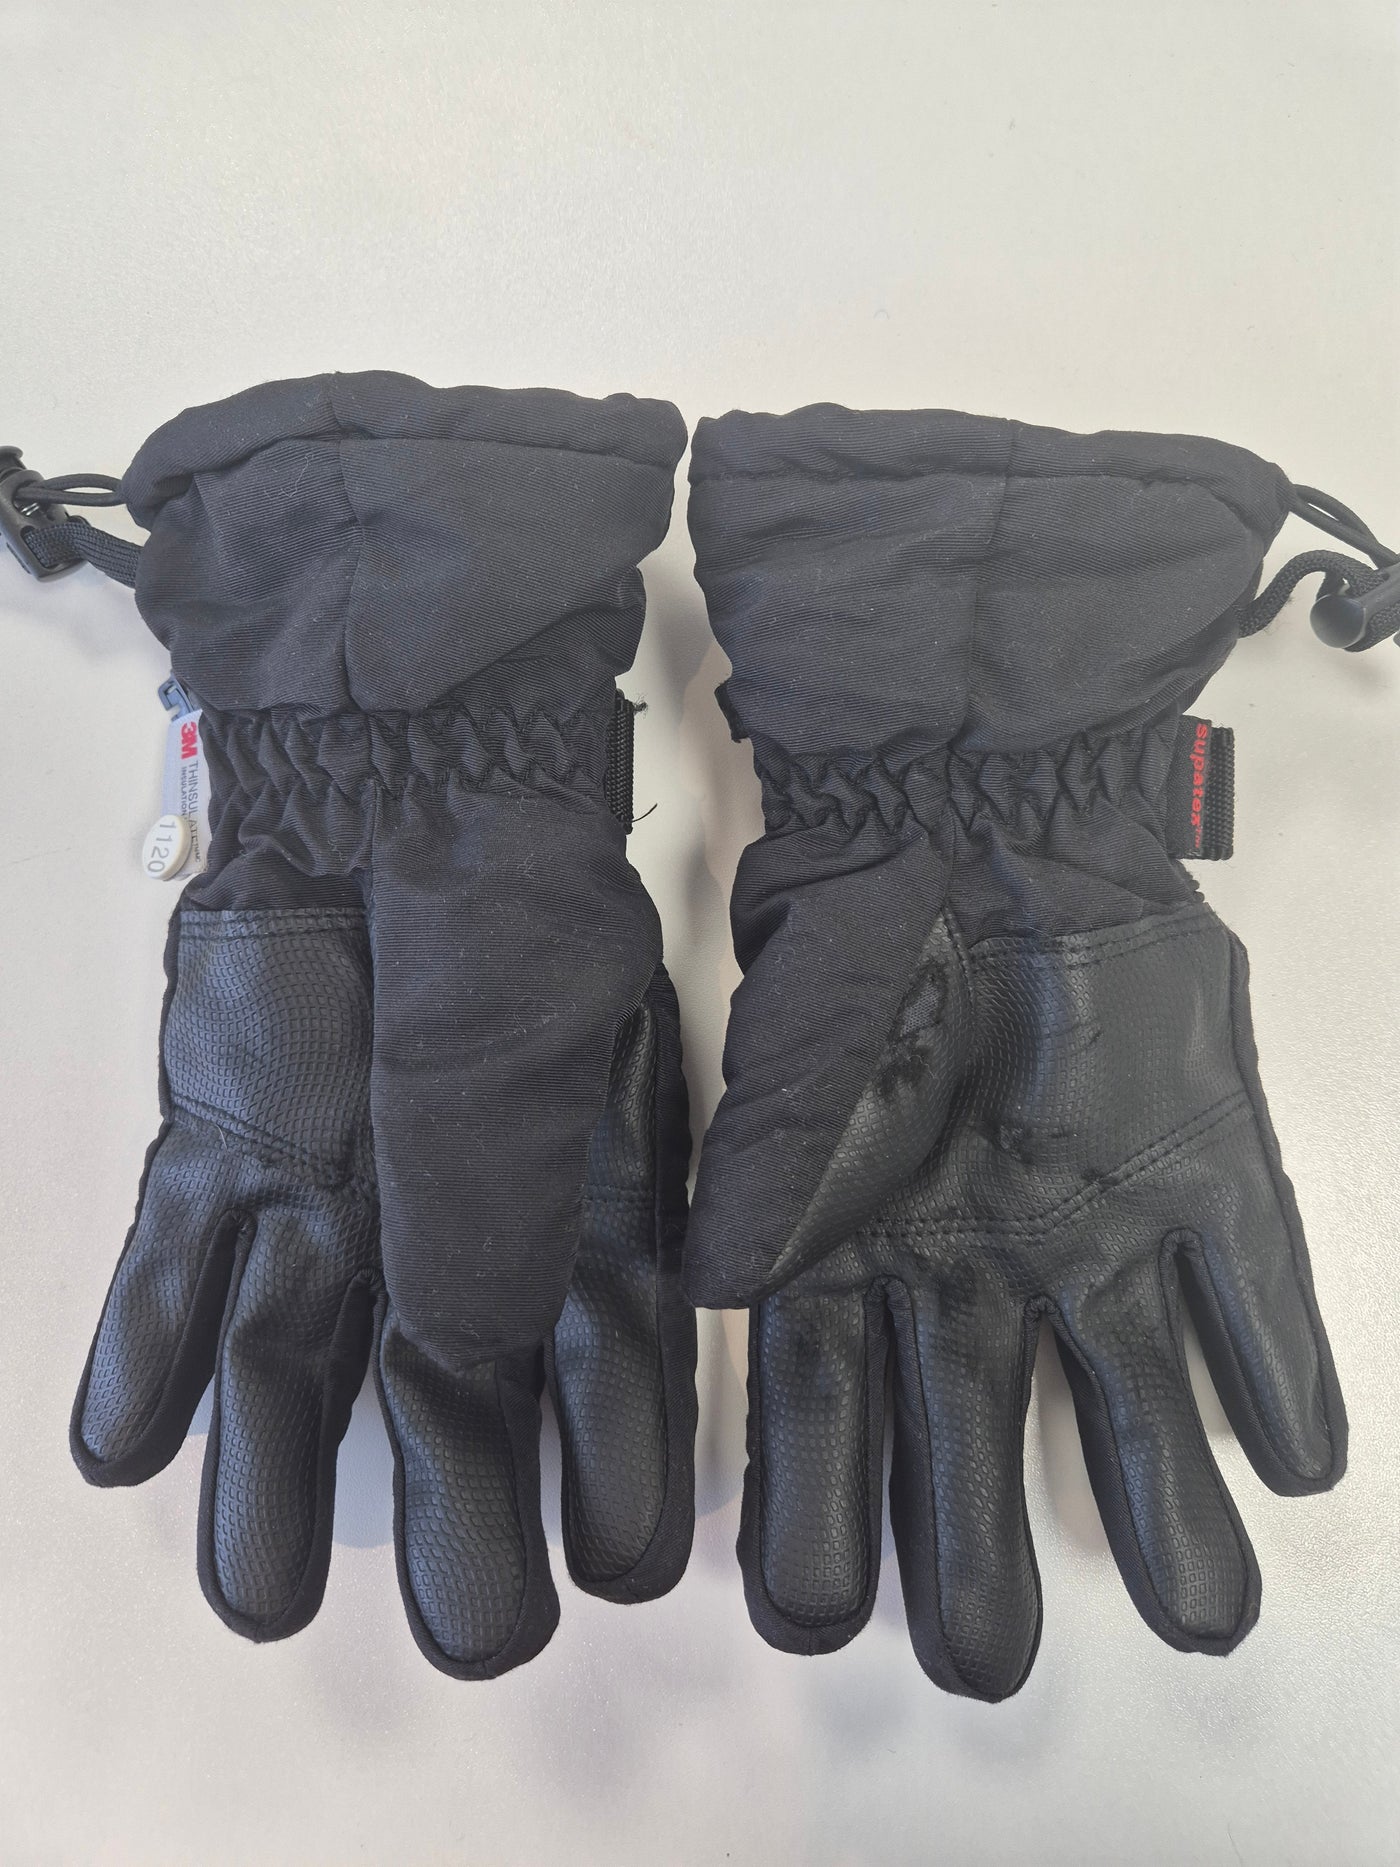 Pre-loved Park Peak Piste Rocket Gloves Size 7 (11/12 yrs) (1120) Grade B